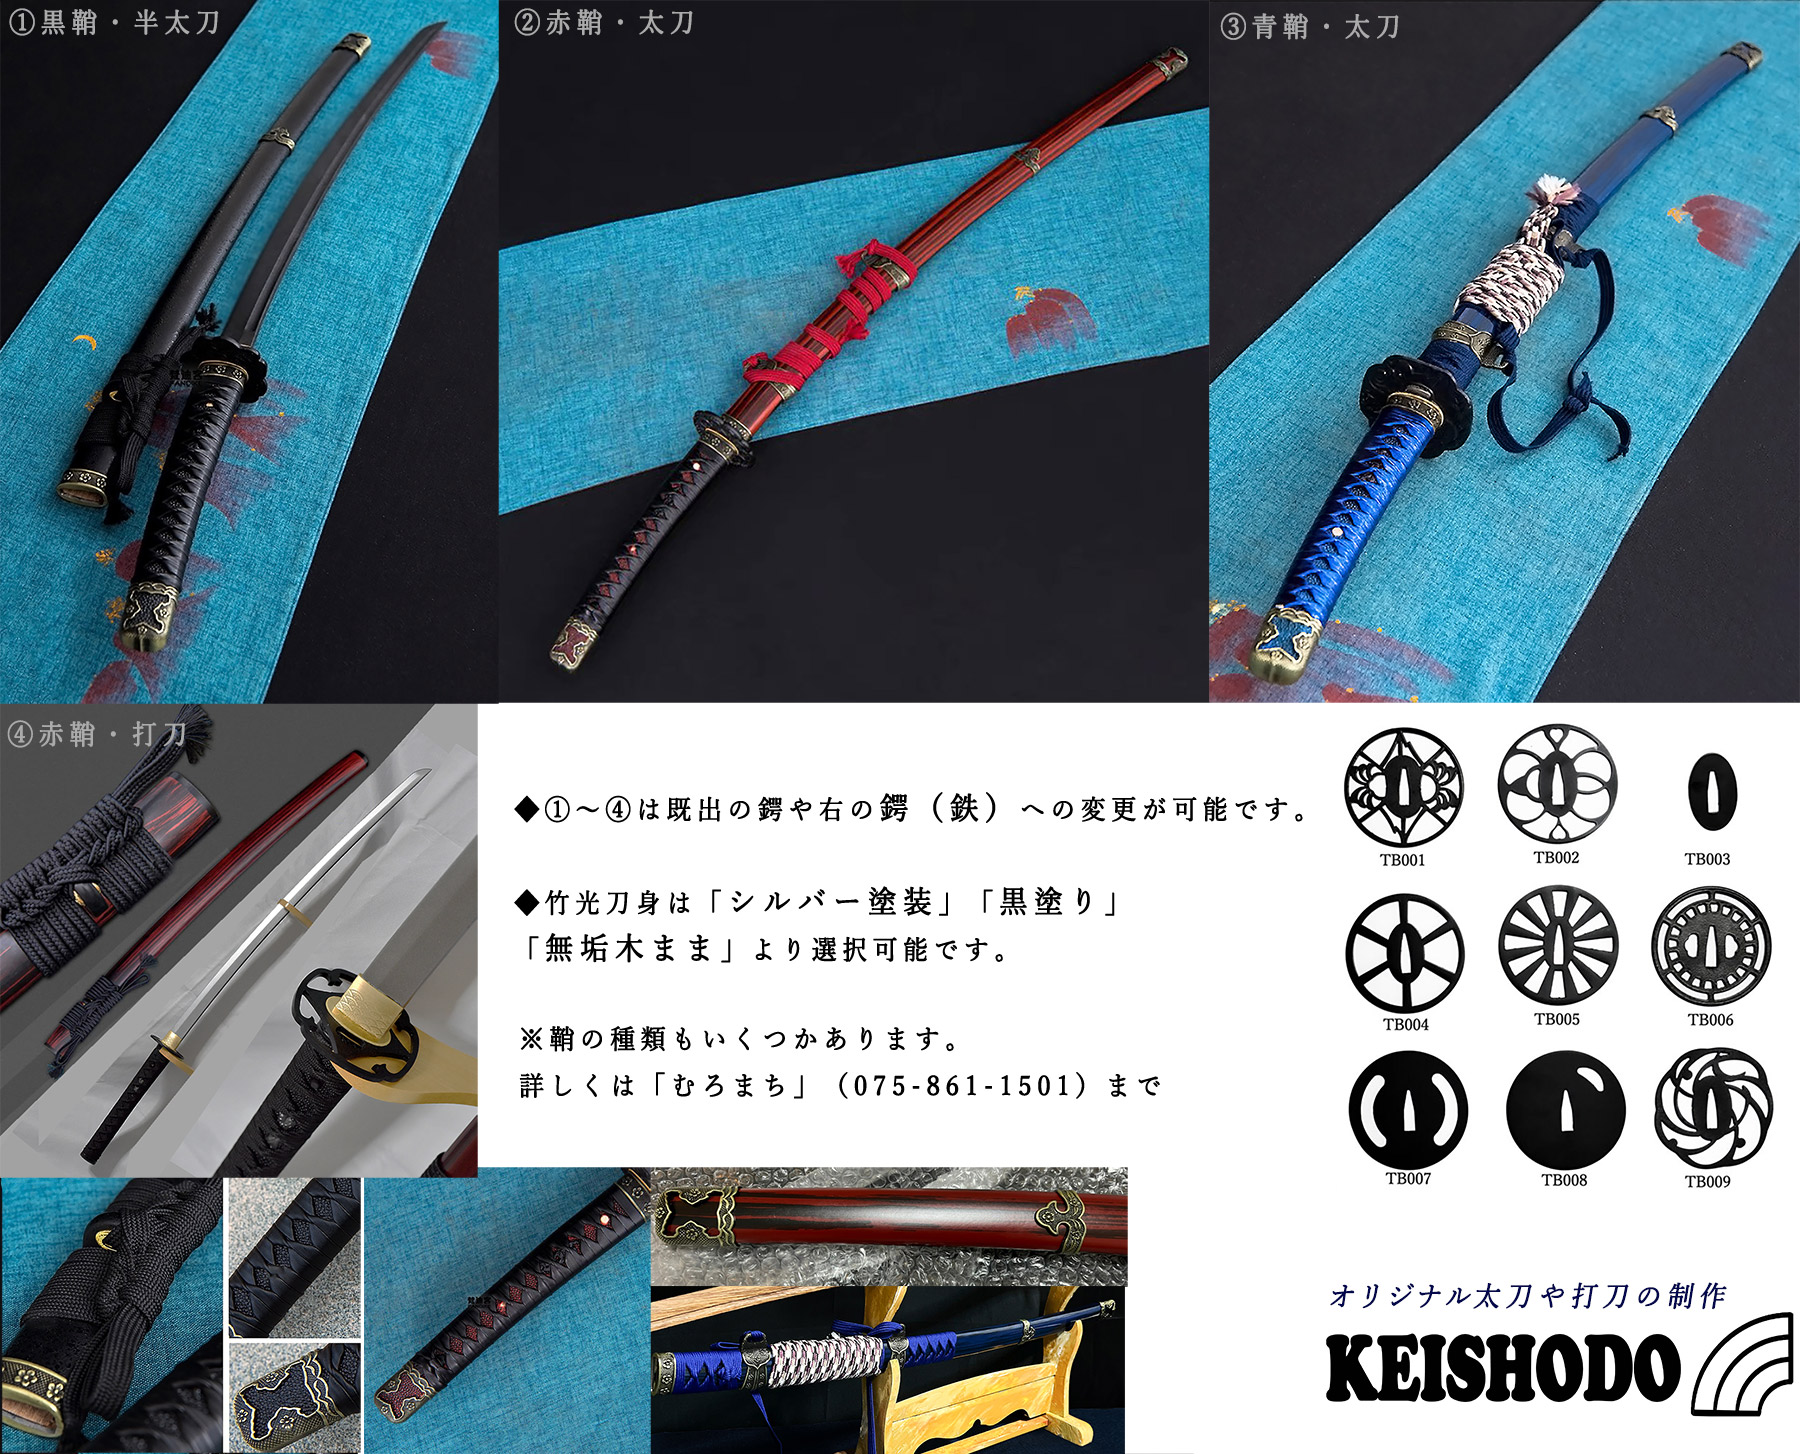 KEISHODOブランド オリジナル太刀・打刀の制作